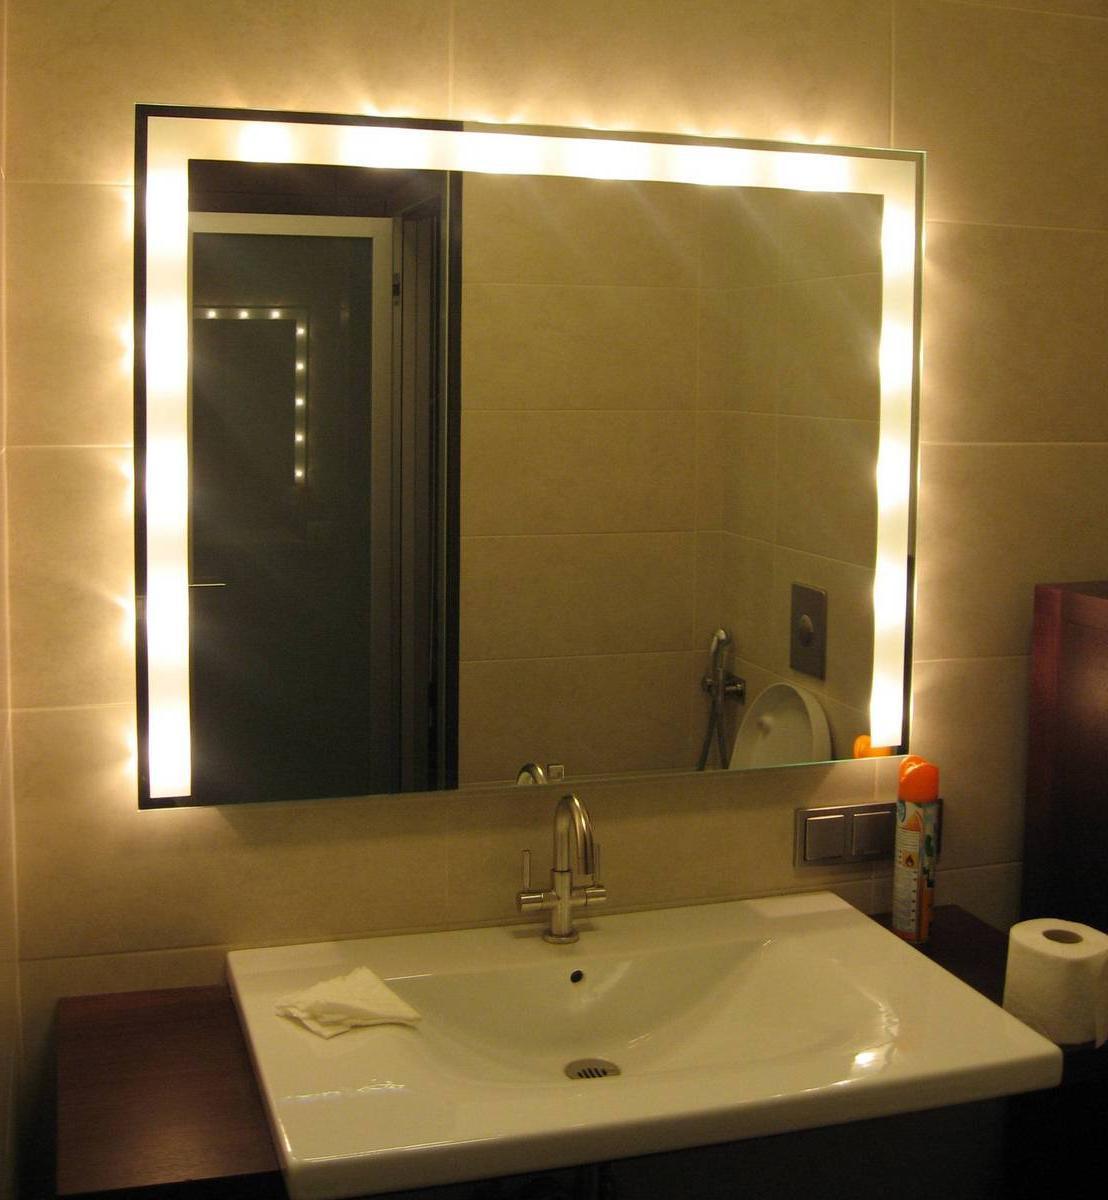 Led Bathroom Light Bulbs
 amazing bathroom led lighting design behind square mirror